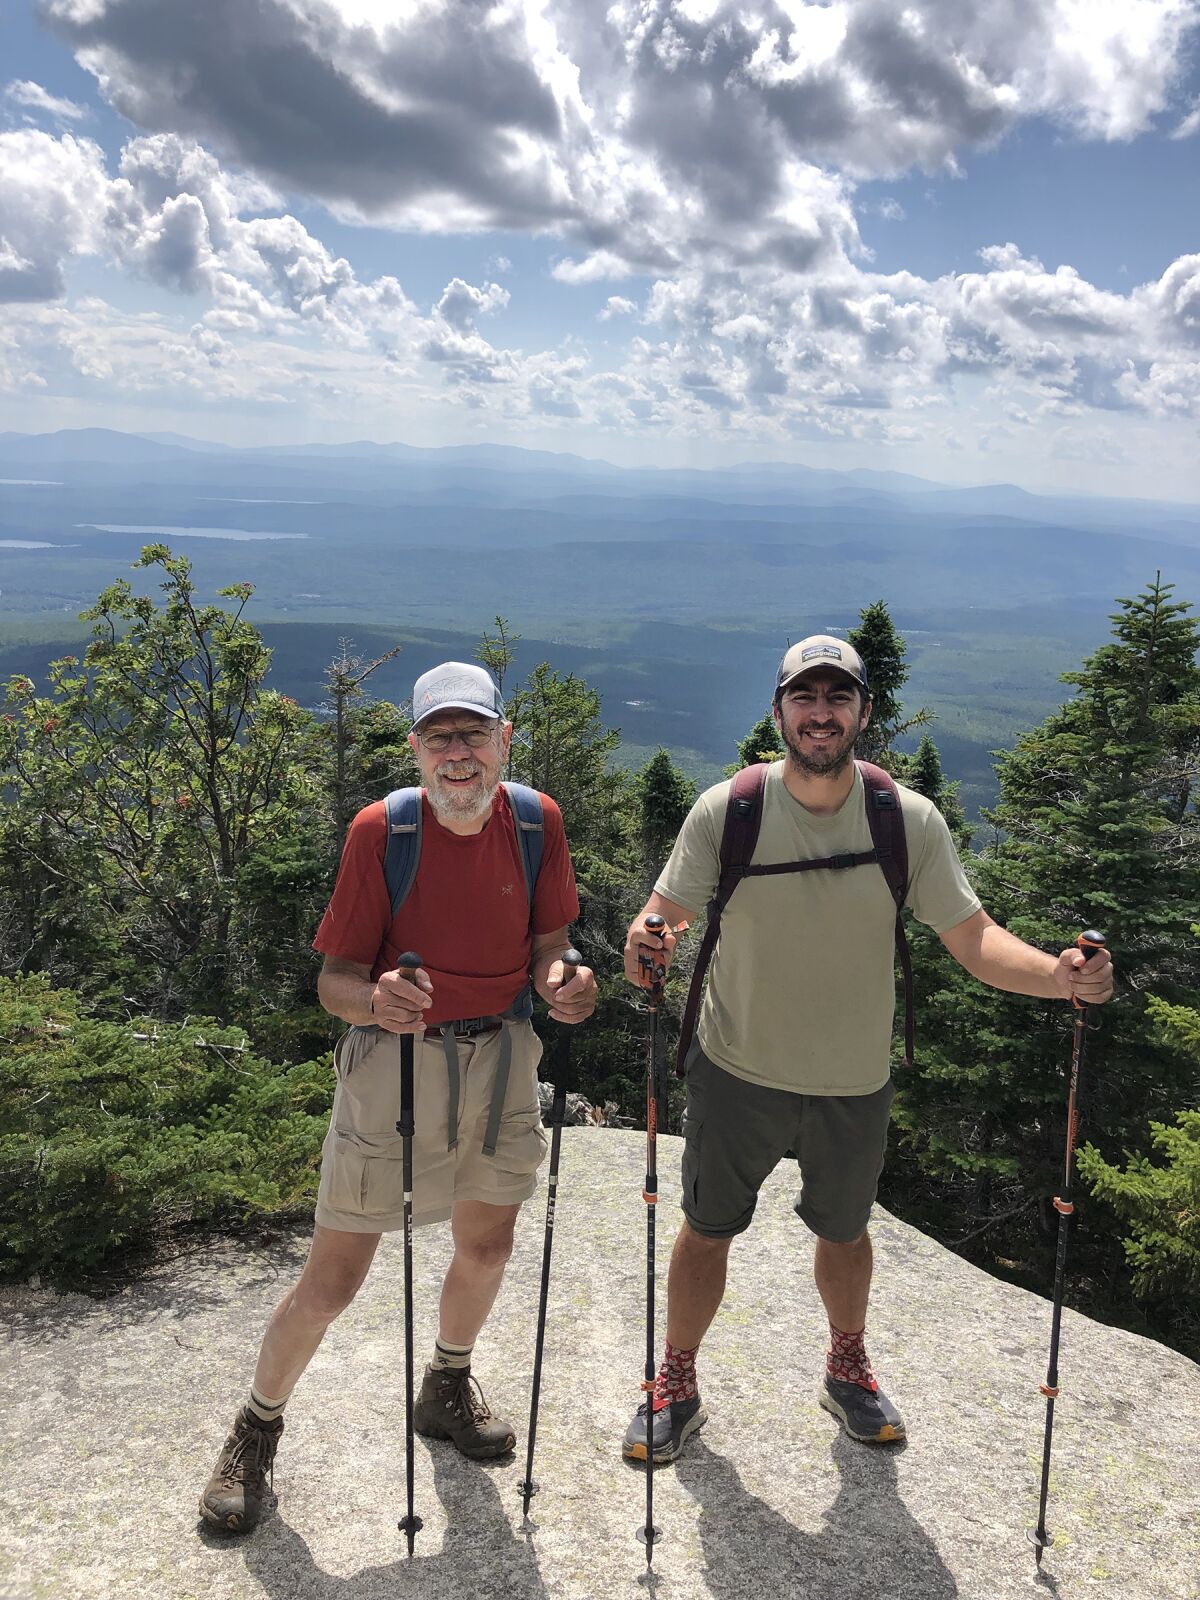 Two men in hiking gear on a mountain